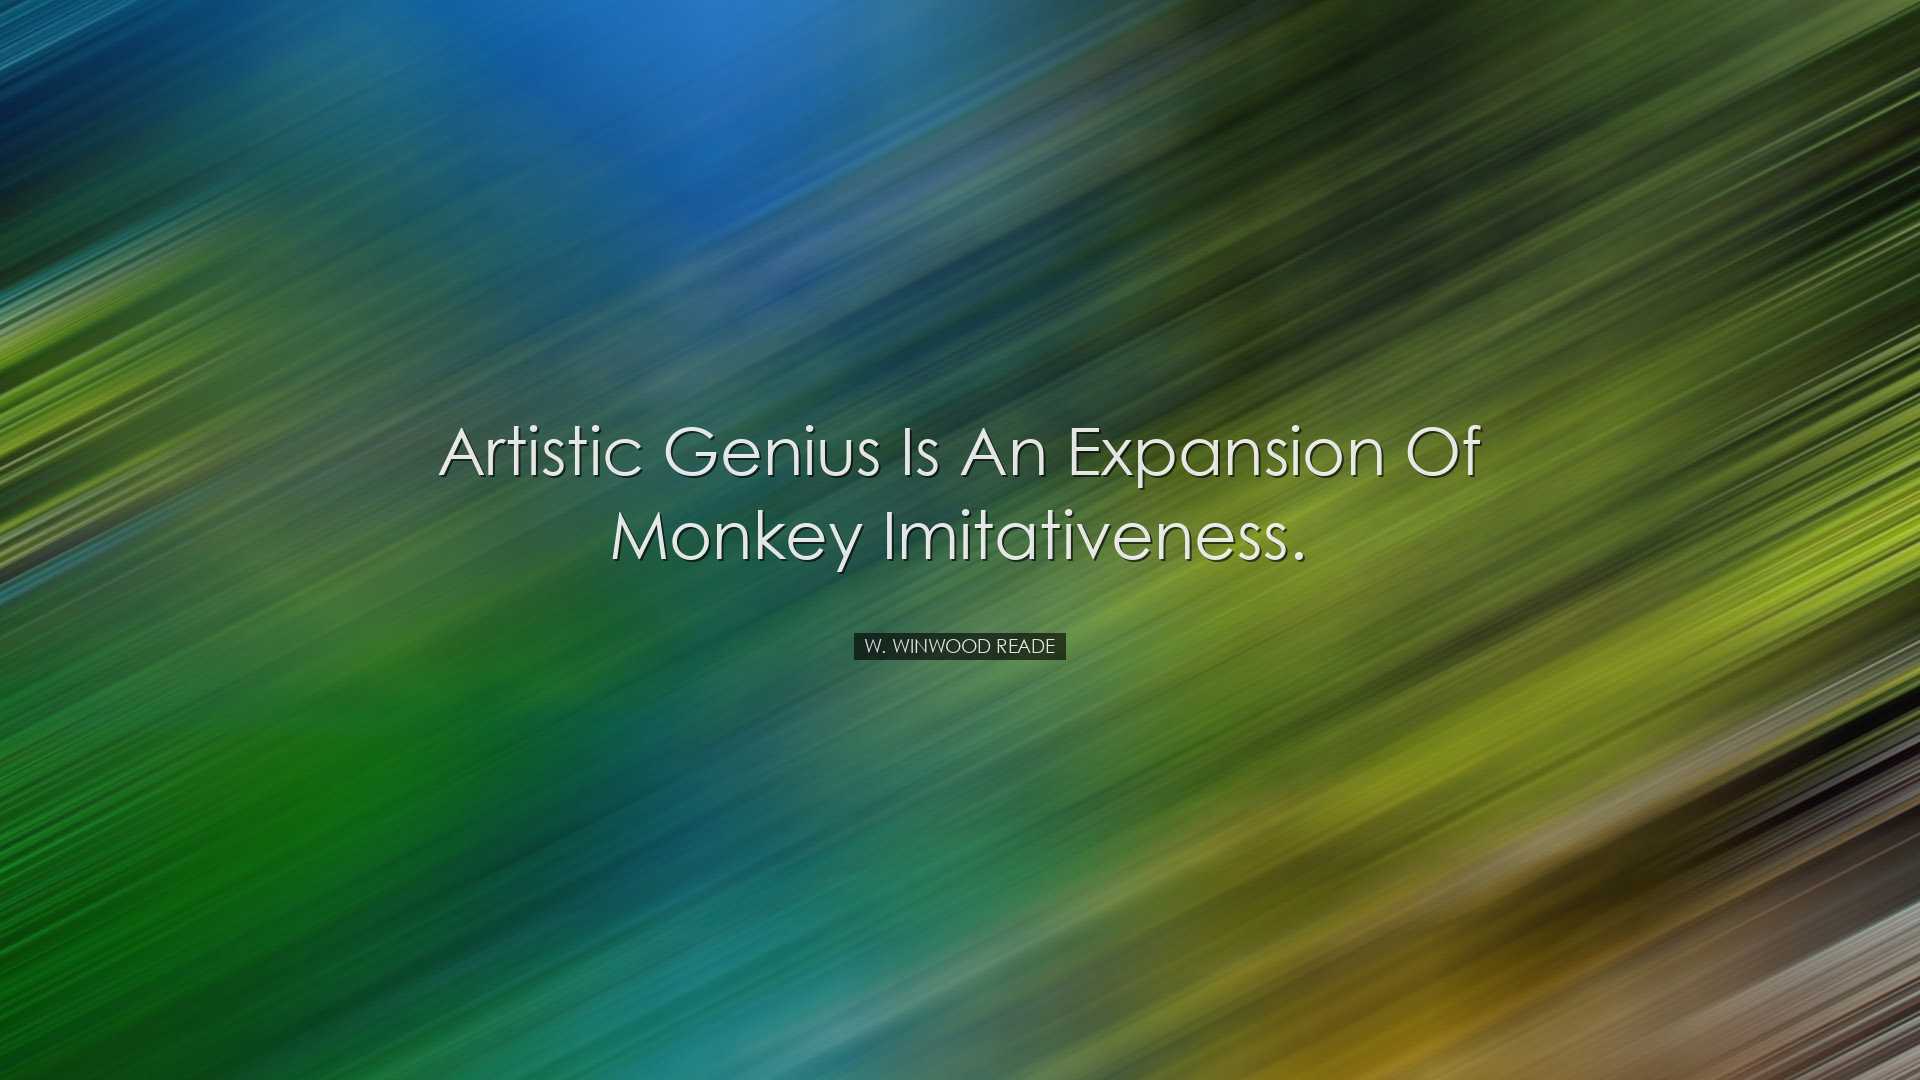 Artistic genius is an expansion of monkey imitativeness. - W. Winw